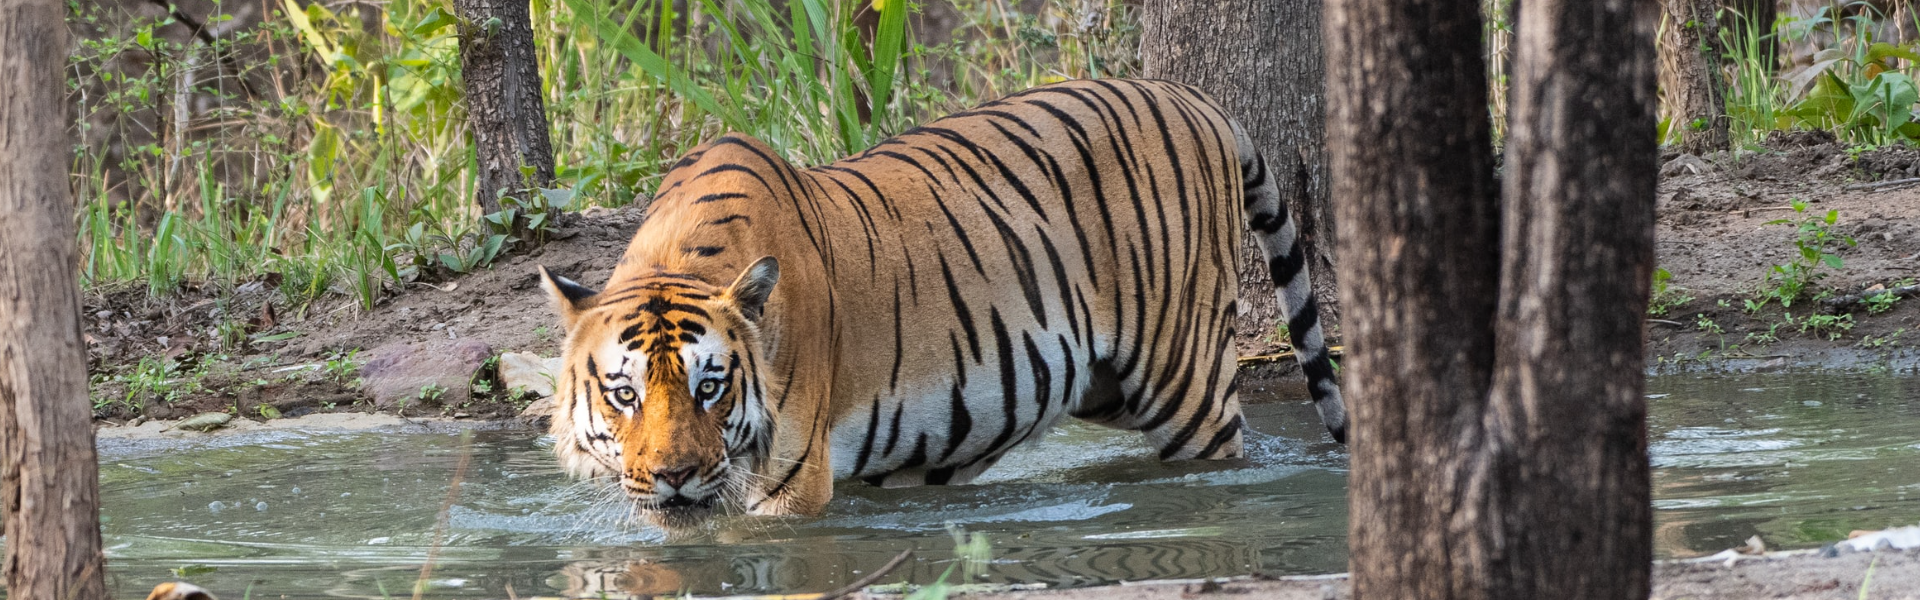 Tiger, Nepal